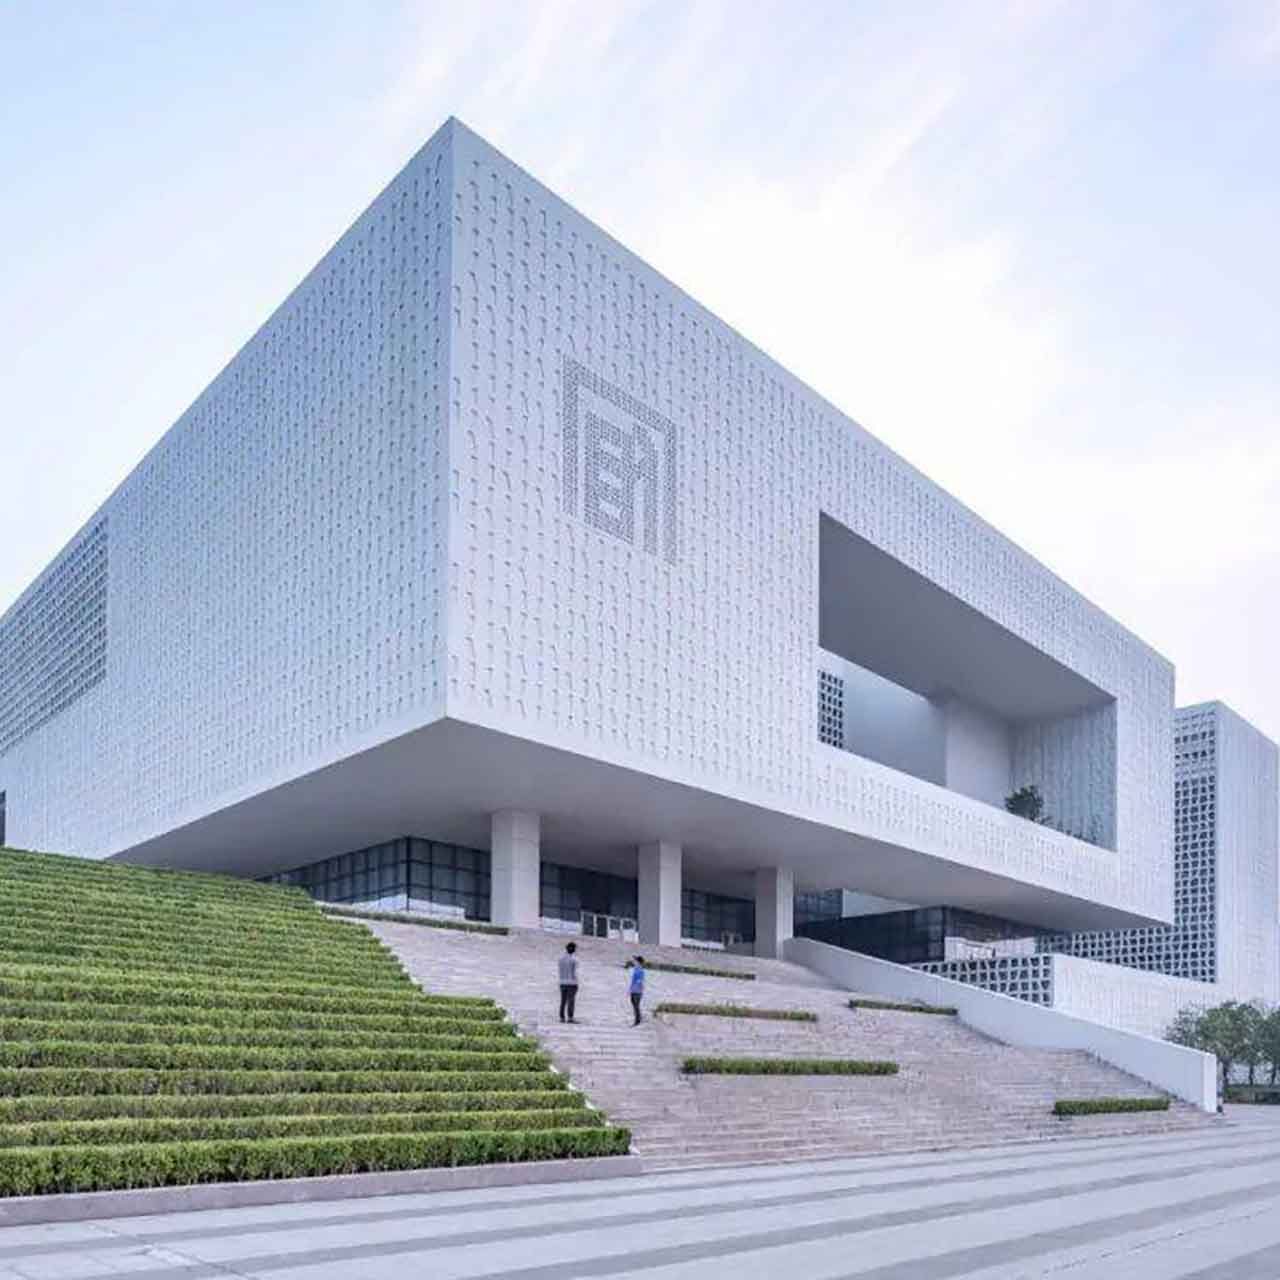 Exhibition hall in Suzhou